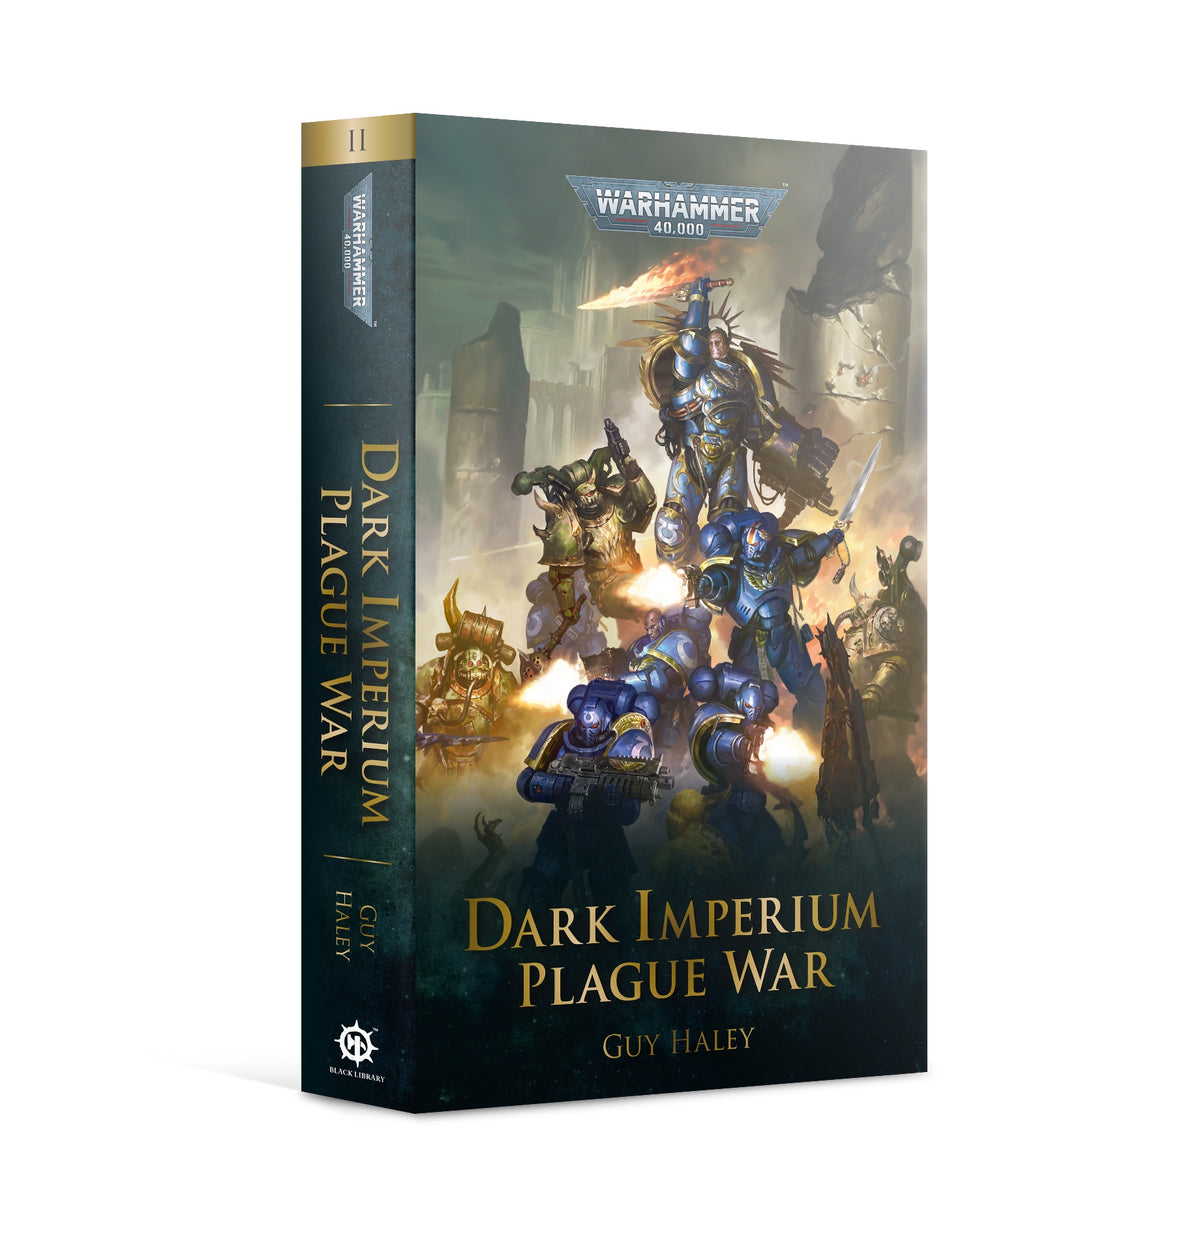 Dark Imperium: Plague War (Novel PB)